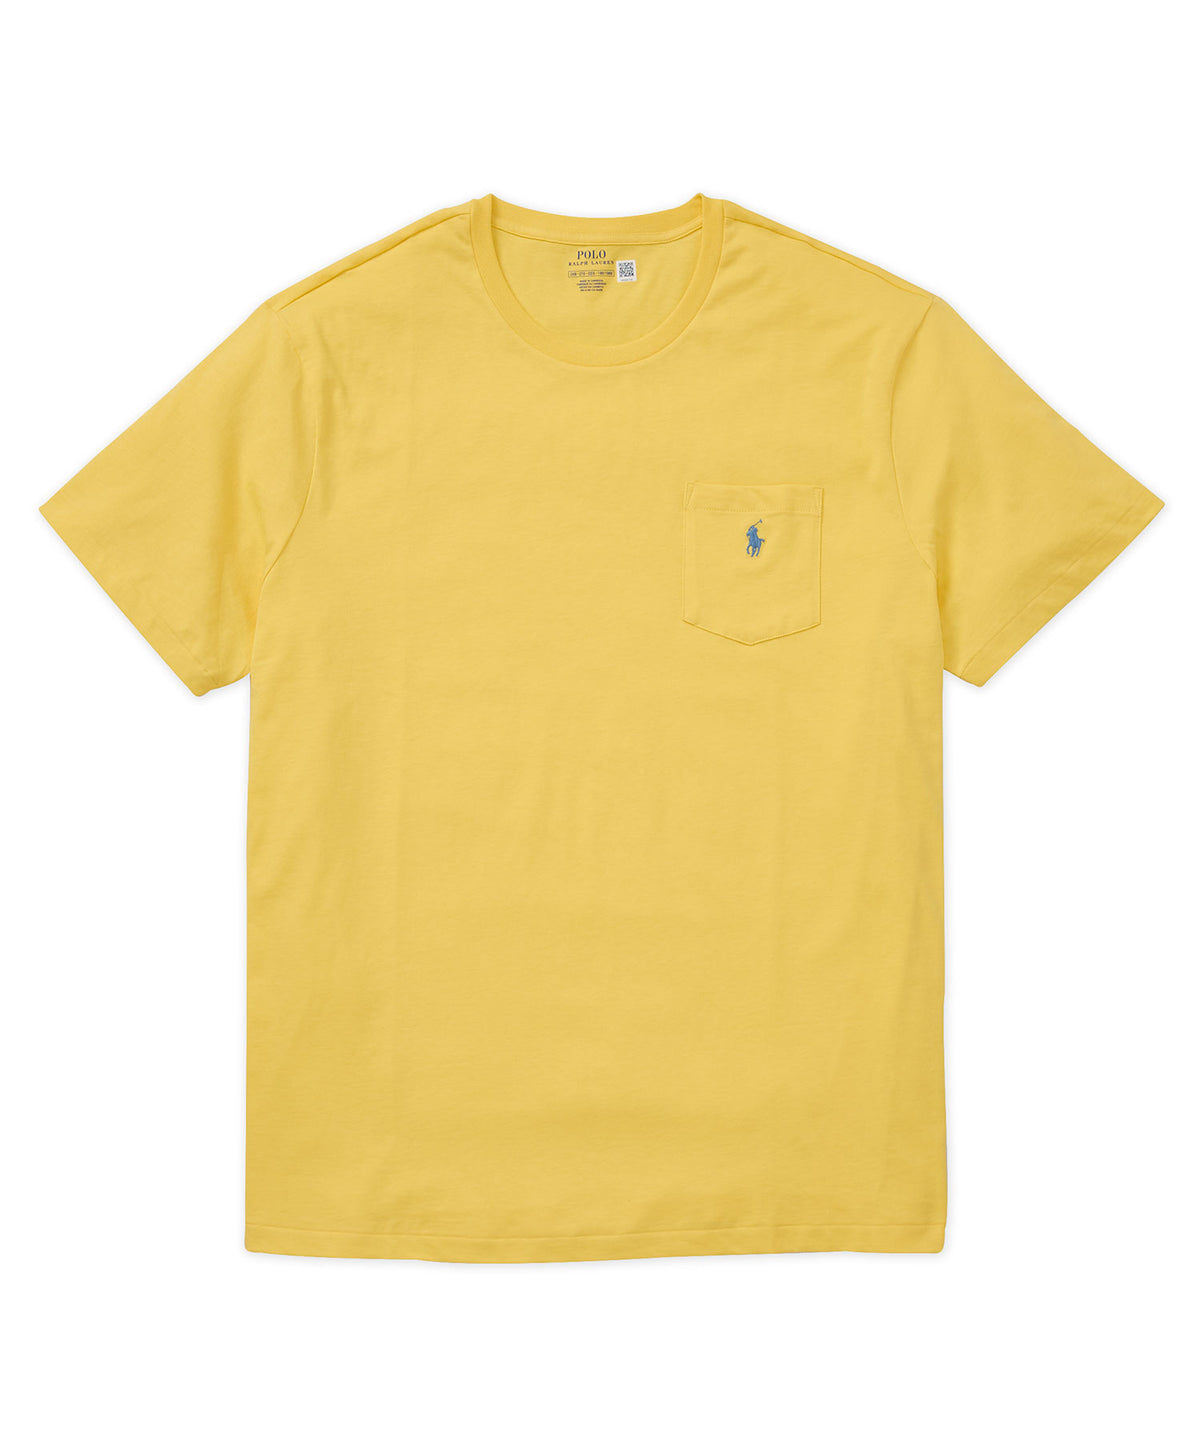 Polo Ralph Lauren Short Sleeve Solid Pocket Crewneck Tee Shirt, Men's Big & Tall